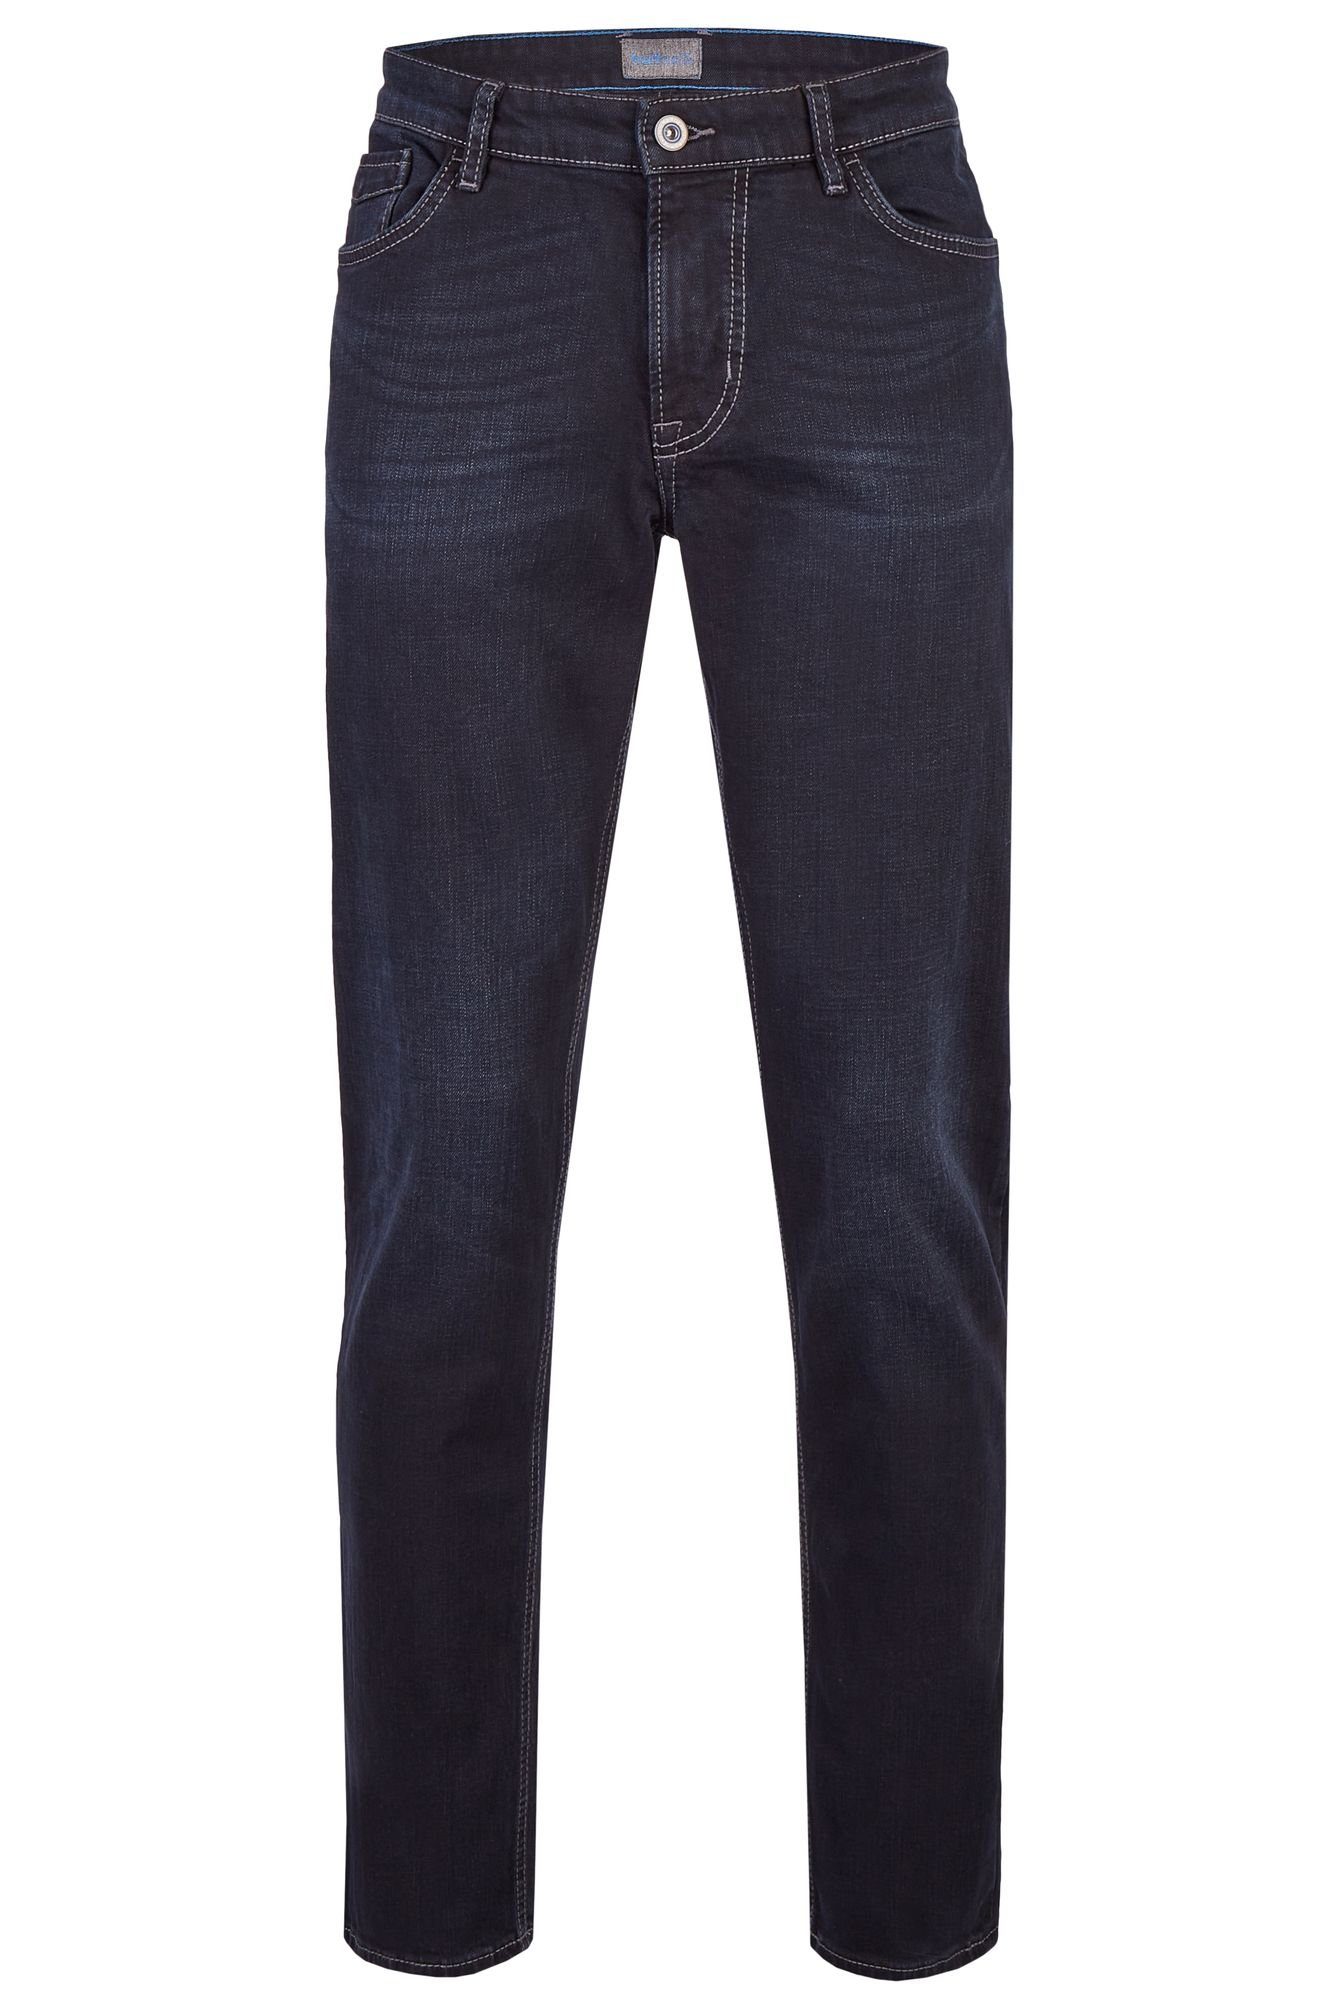 Hattric 5-Pocket-Jeans 688465-9285 blue black (89) | Stoffhosen